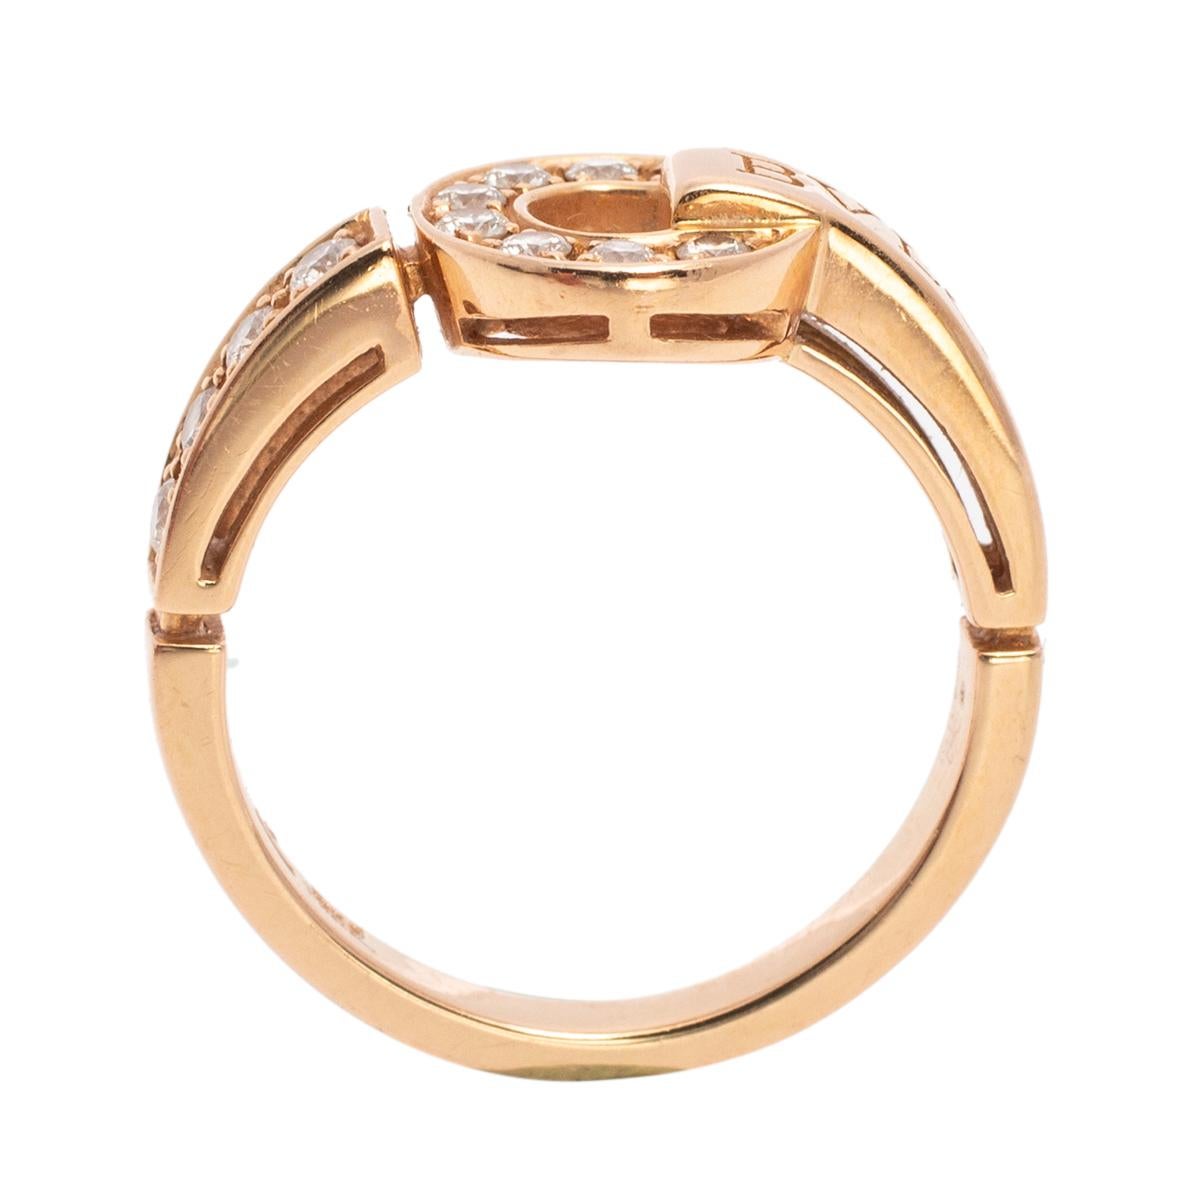 Contemporary Bvlgari Bvlgari Pave Diamond 18K Rose Gold Ring Size 56